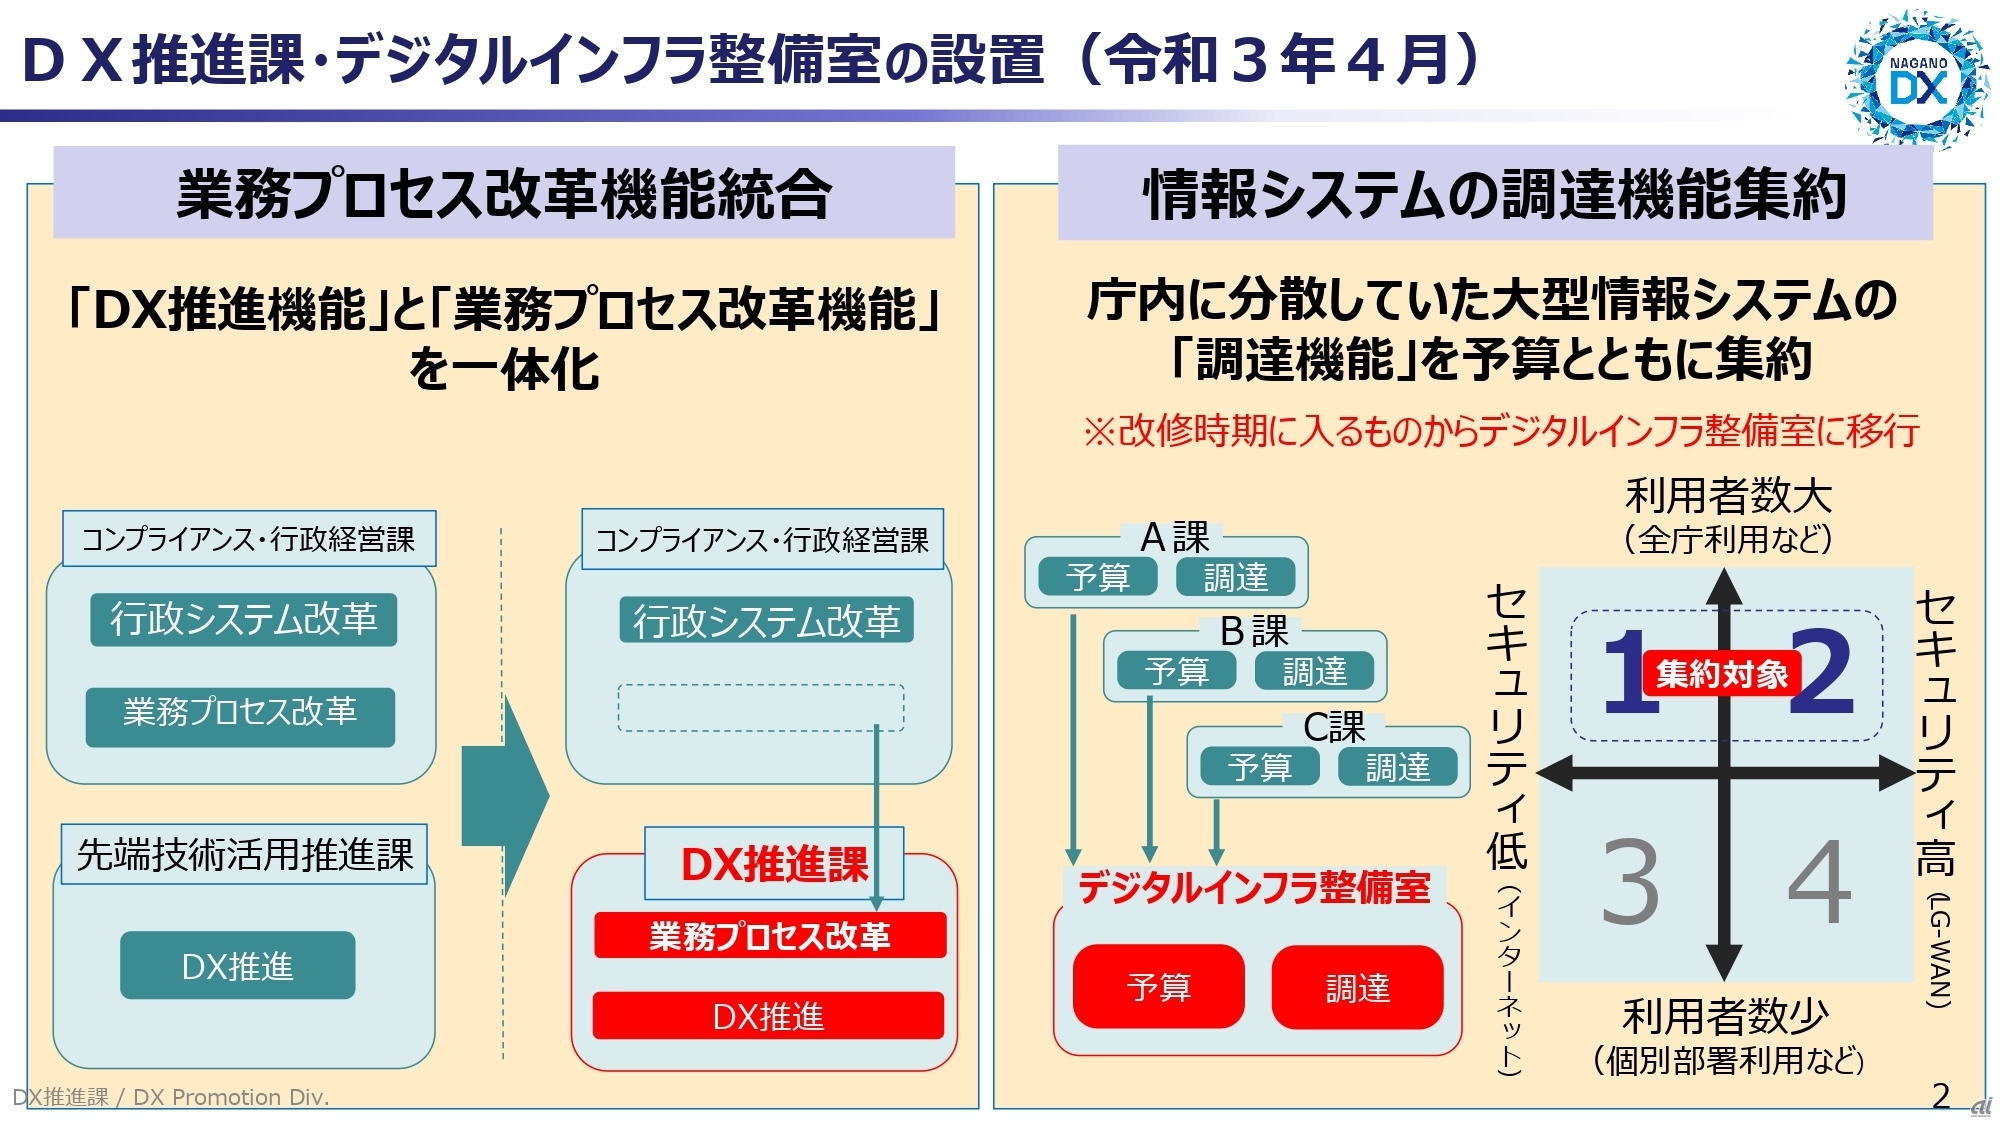 DX推進課・デジタルインフラ整備室の設置（提供：長野県 企画振興部 DX推進課）